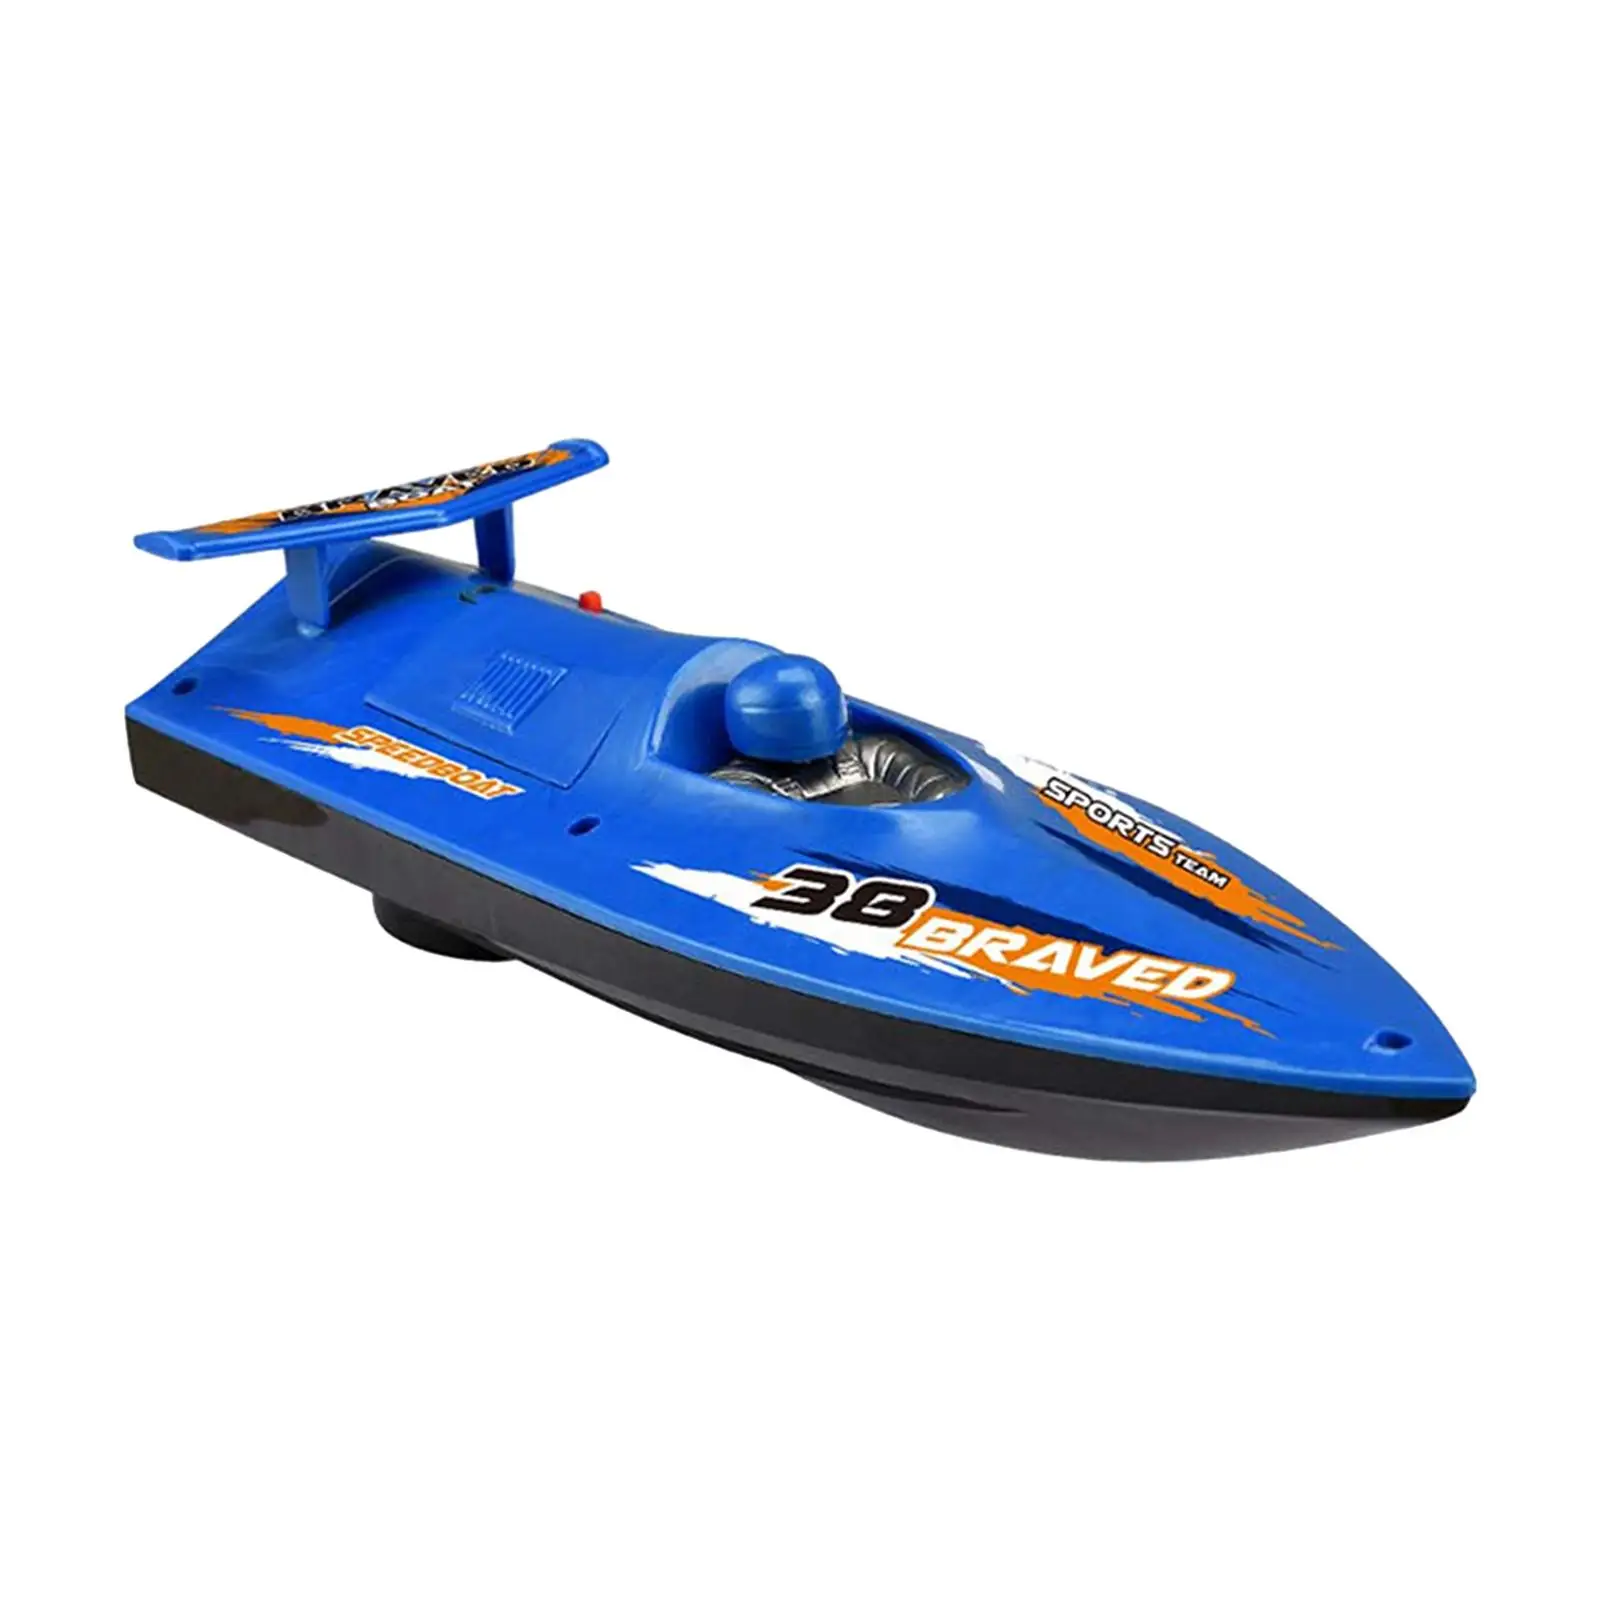 Yacht Pool Toy Sailing Boat Bathtub Toy Electric Speed Boat Toy Bath Boat Toy for Streams